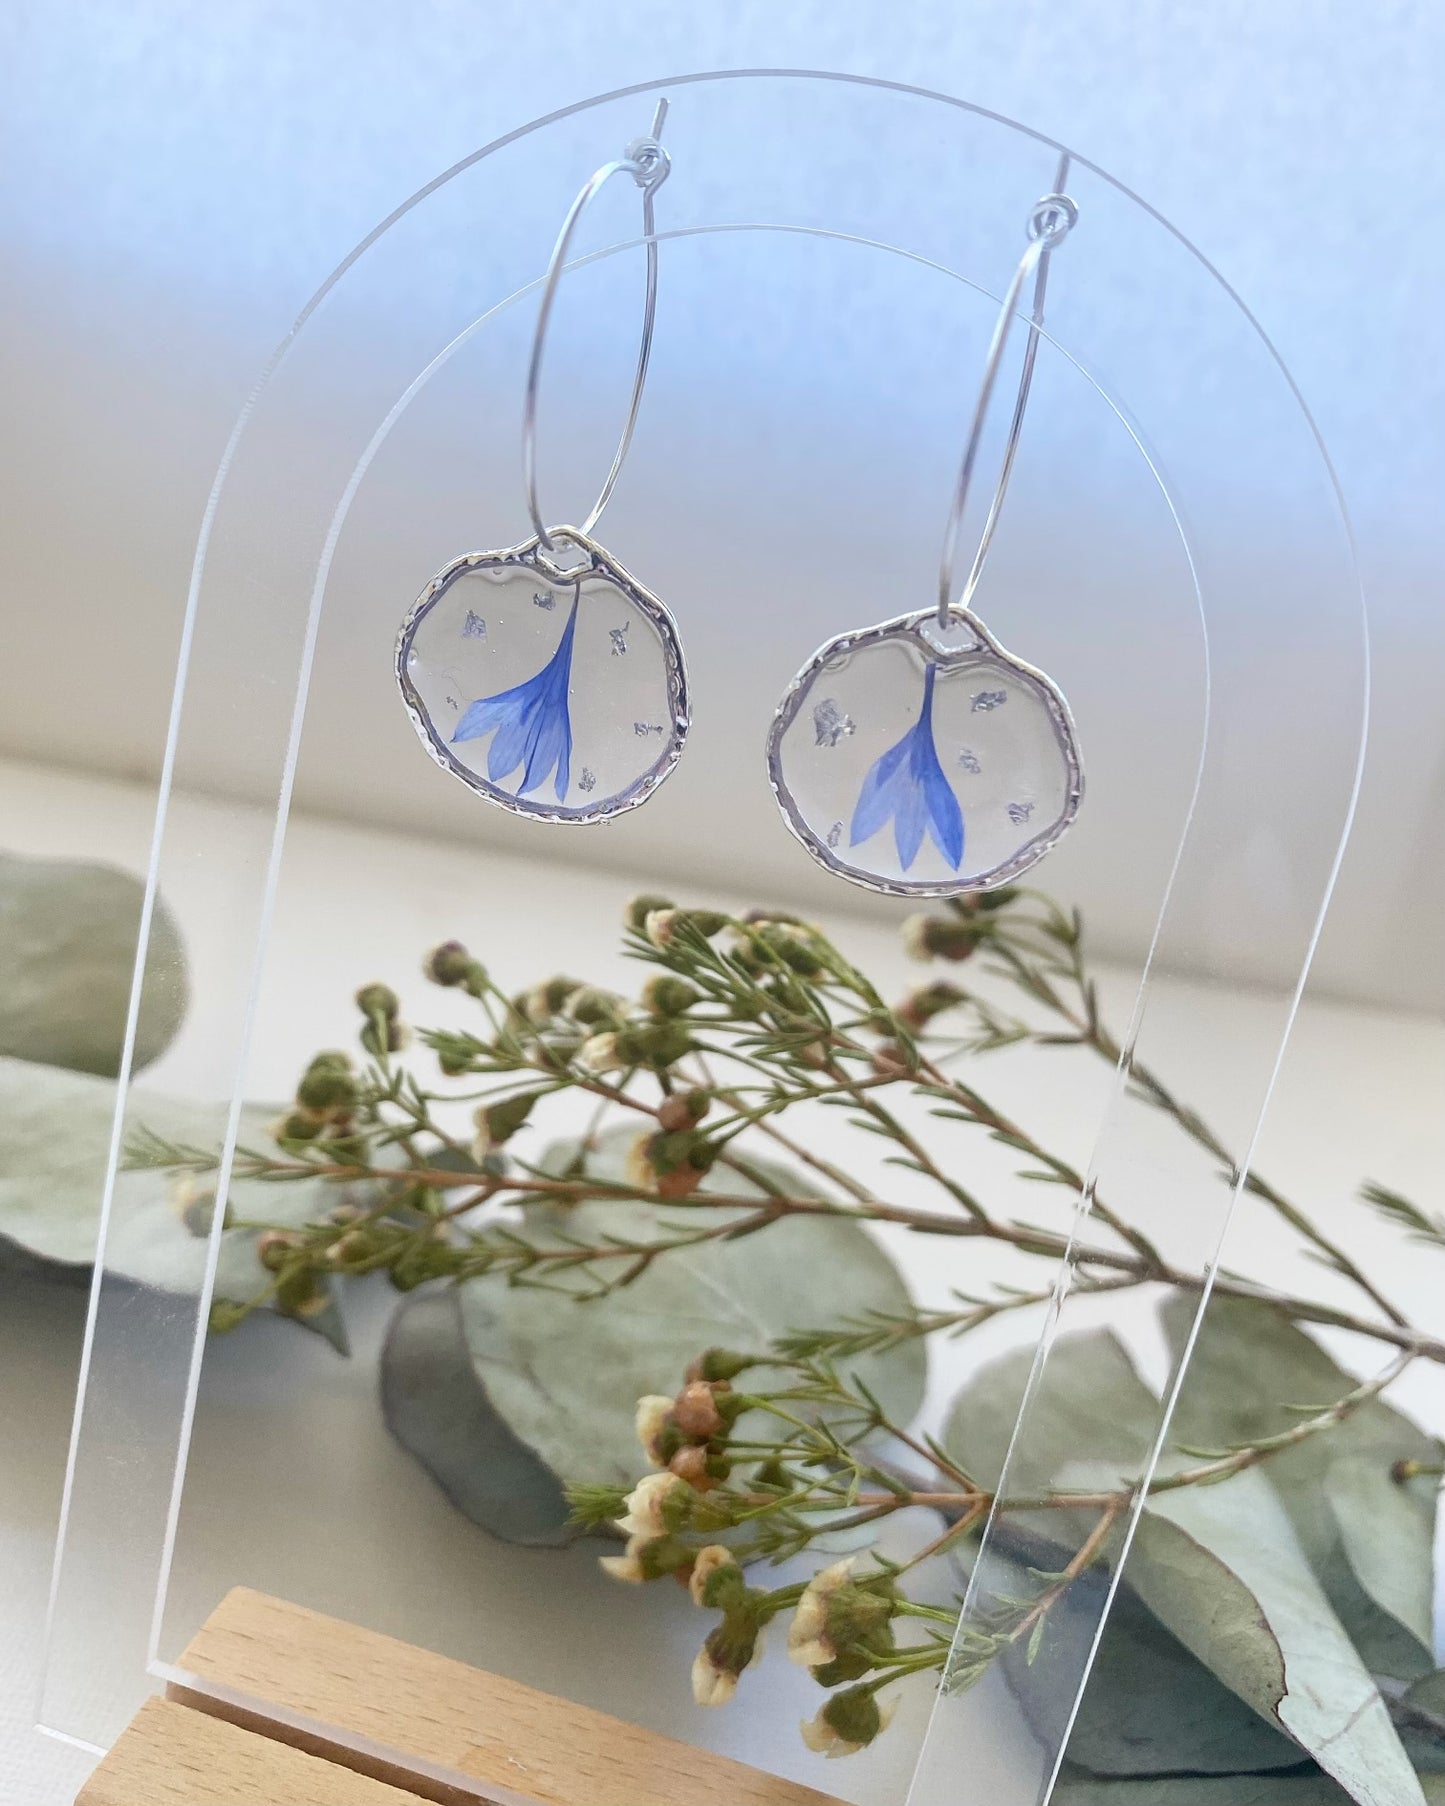 Pressed Blue Cornflower Earrings with Silver Leaf